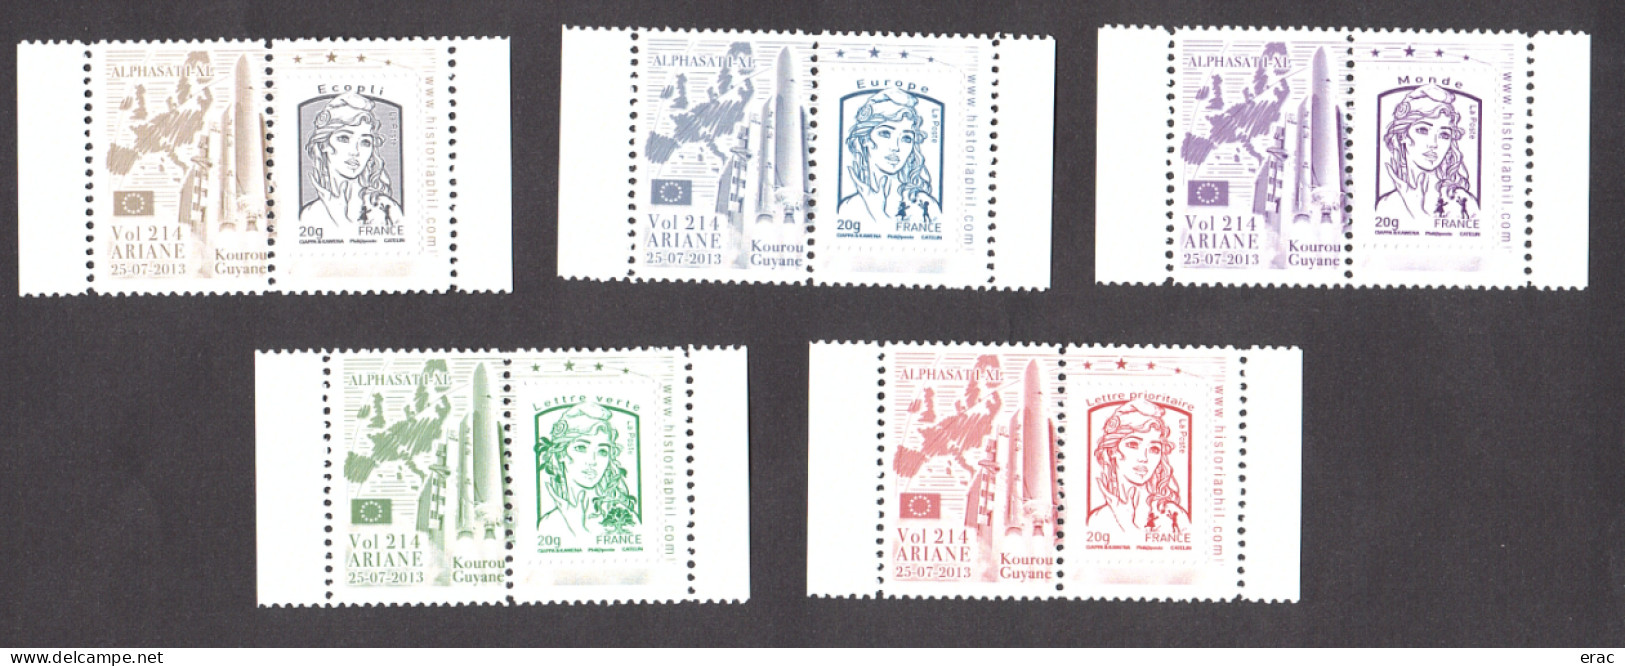 5 Porte-timbres Gommés - 2013 Ariane Vol 214 - Alphasati-XL - Avec TVP Marianne De Ciappa & Kawena Neufs - 2013-2018 Marianne Van Ciappa-Kawena